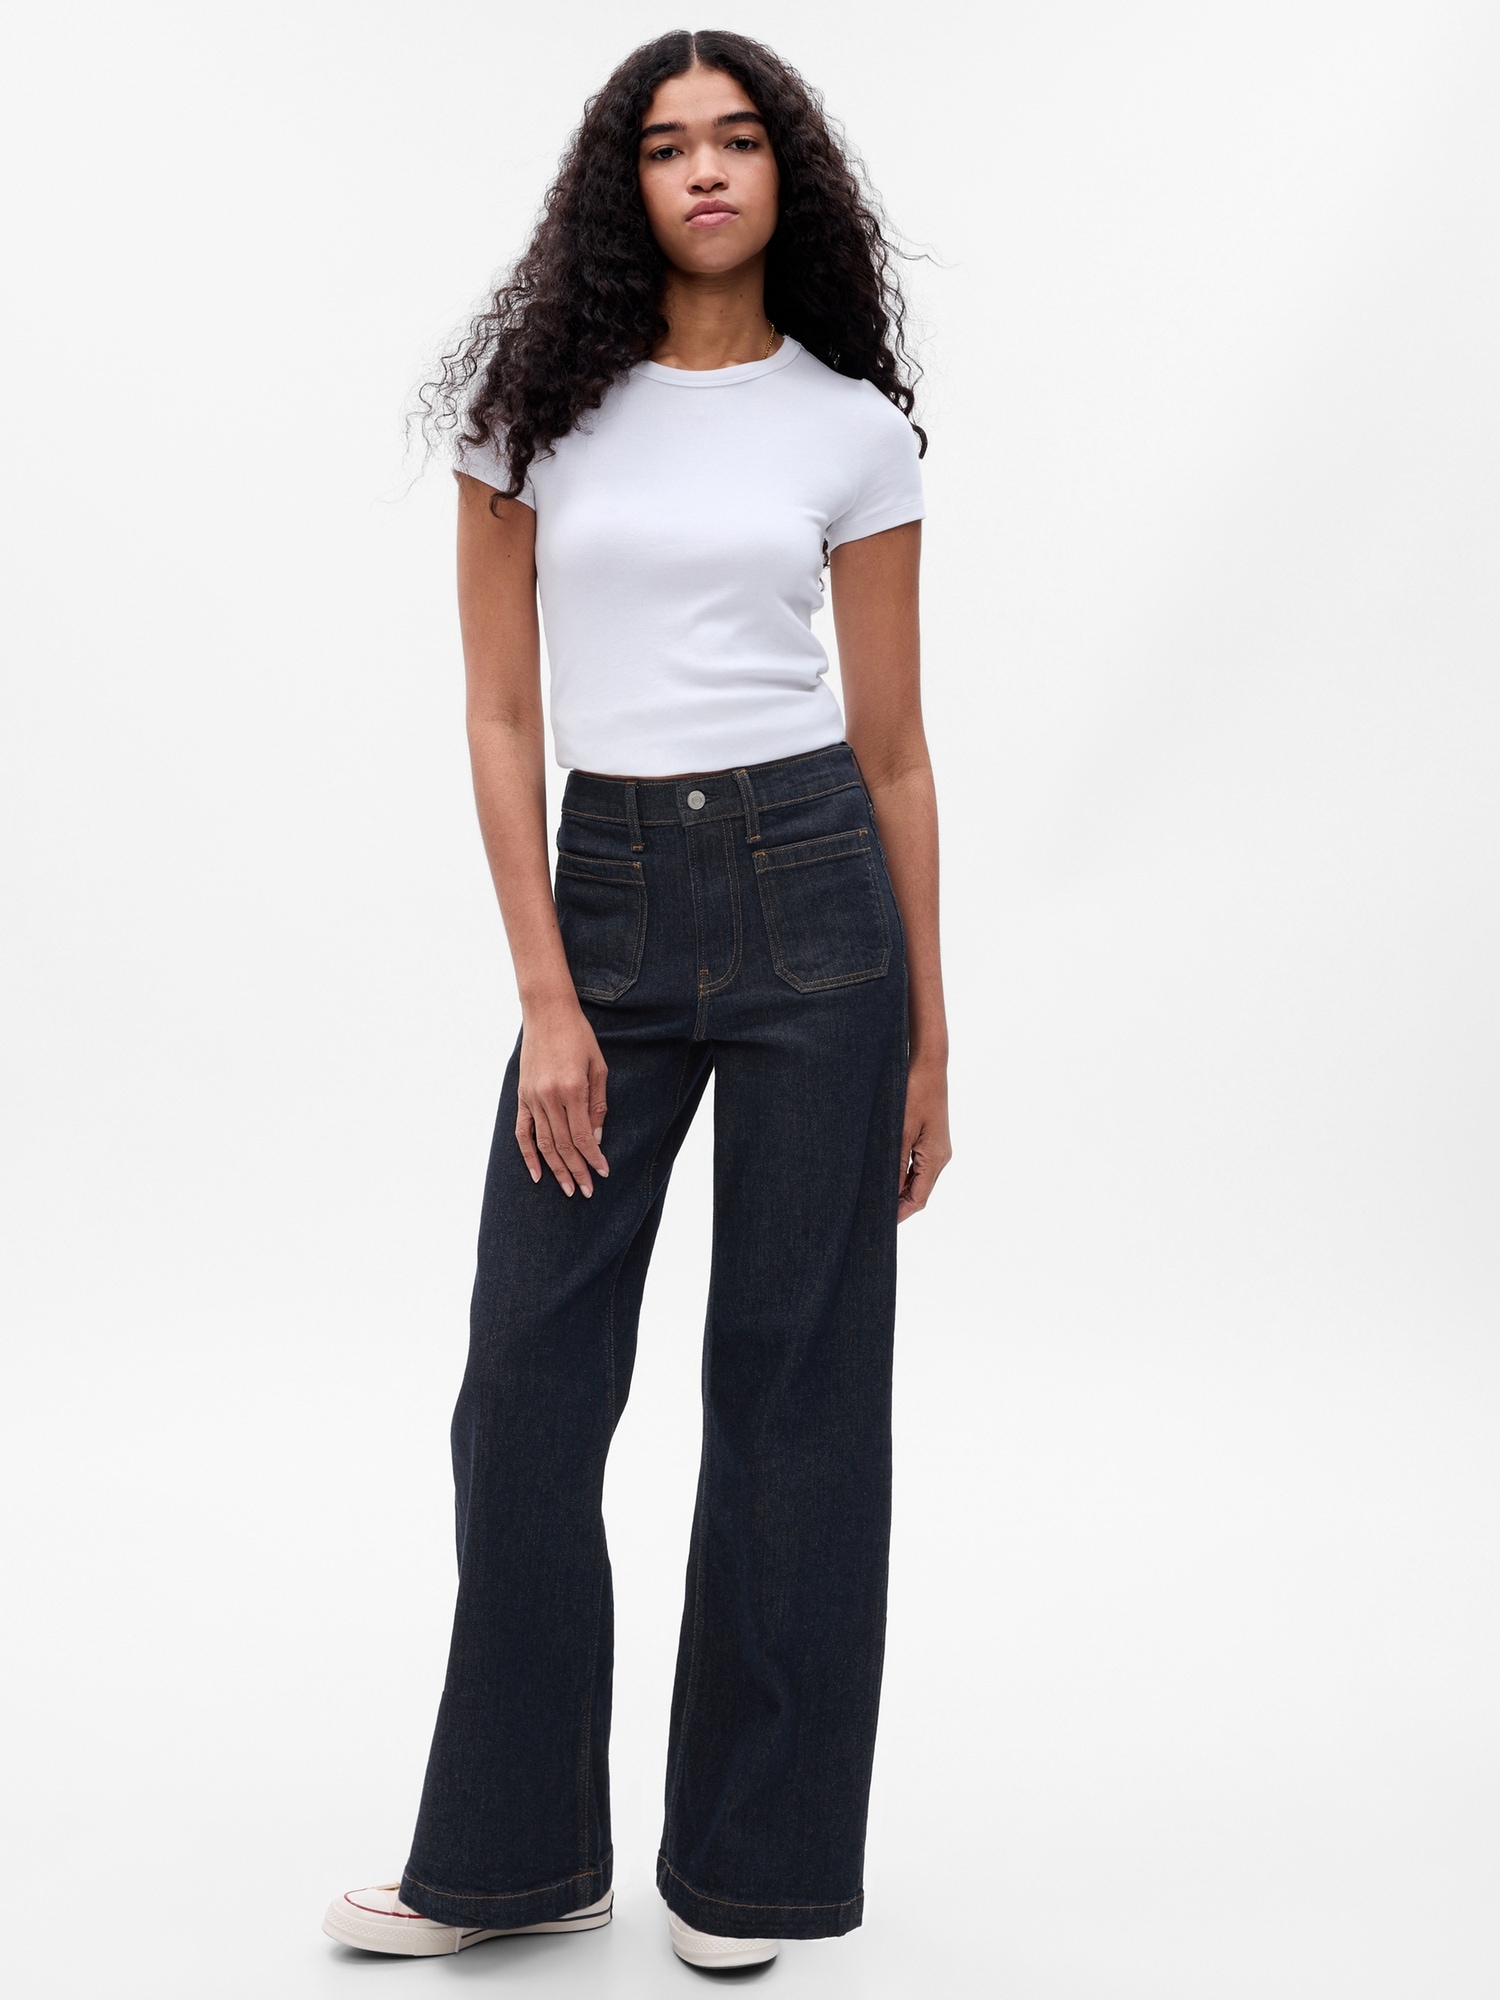 150cm Petite Short Girls Black Grey Jeans Women Low Waist Denim Trouser Straight  Wide Leg XS Cropped Length 88cm Basics Casual - AliExpress